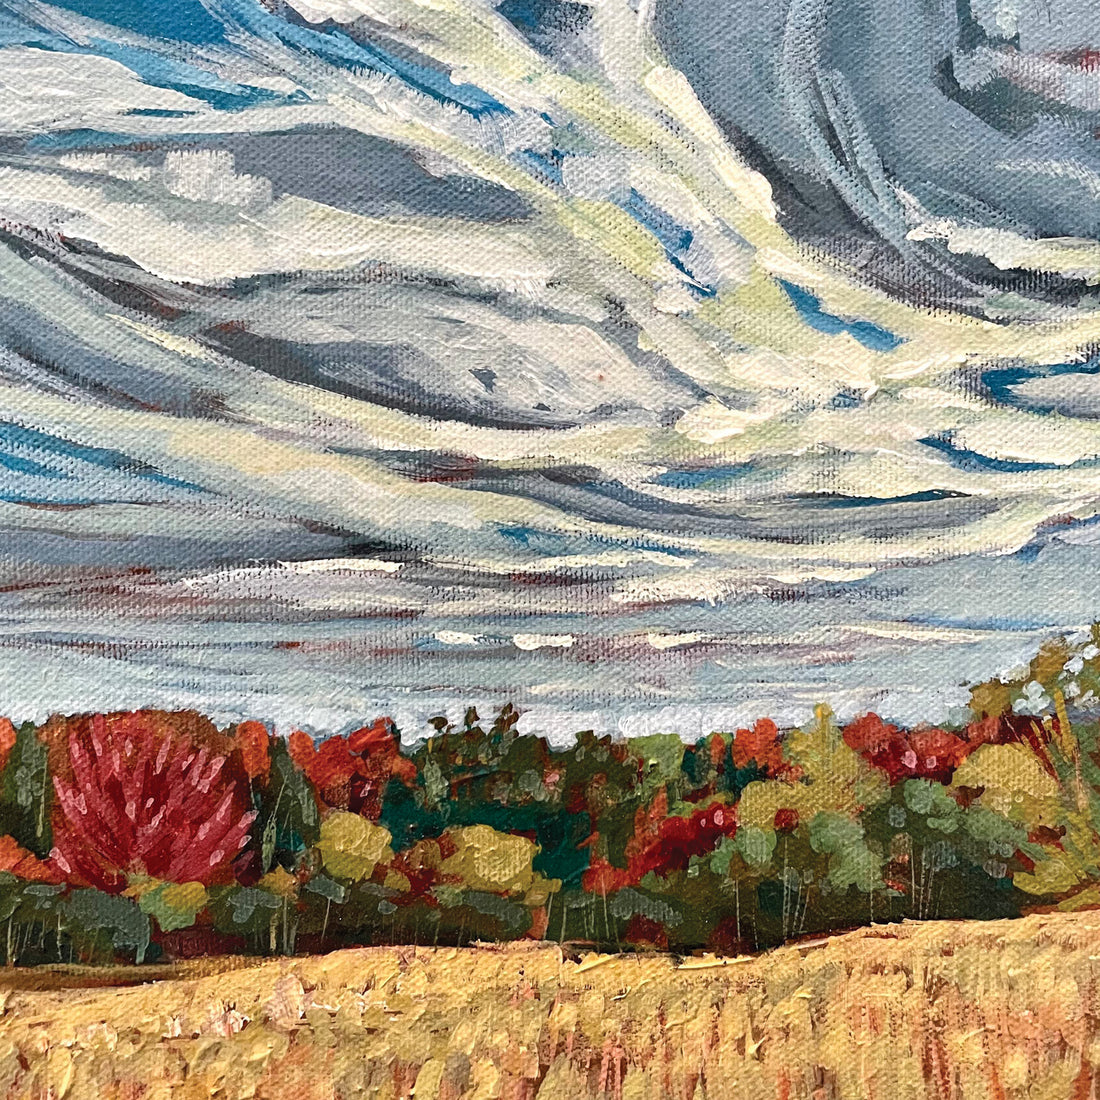 Joanne MacLennan "October Dance" landscape painting Canadian artist